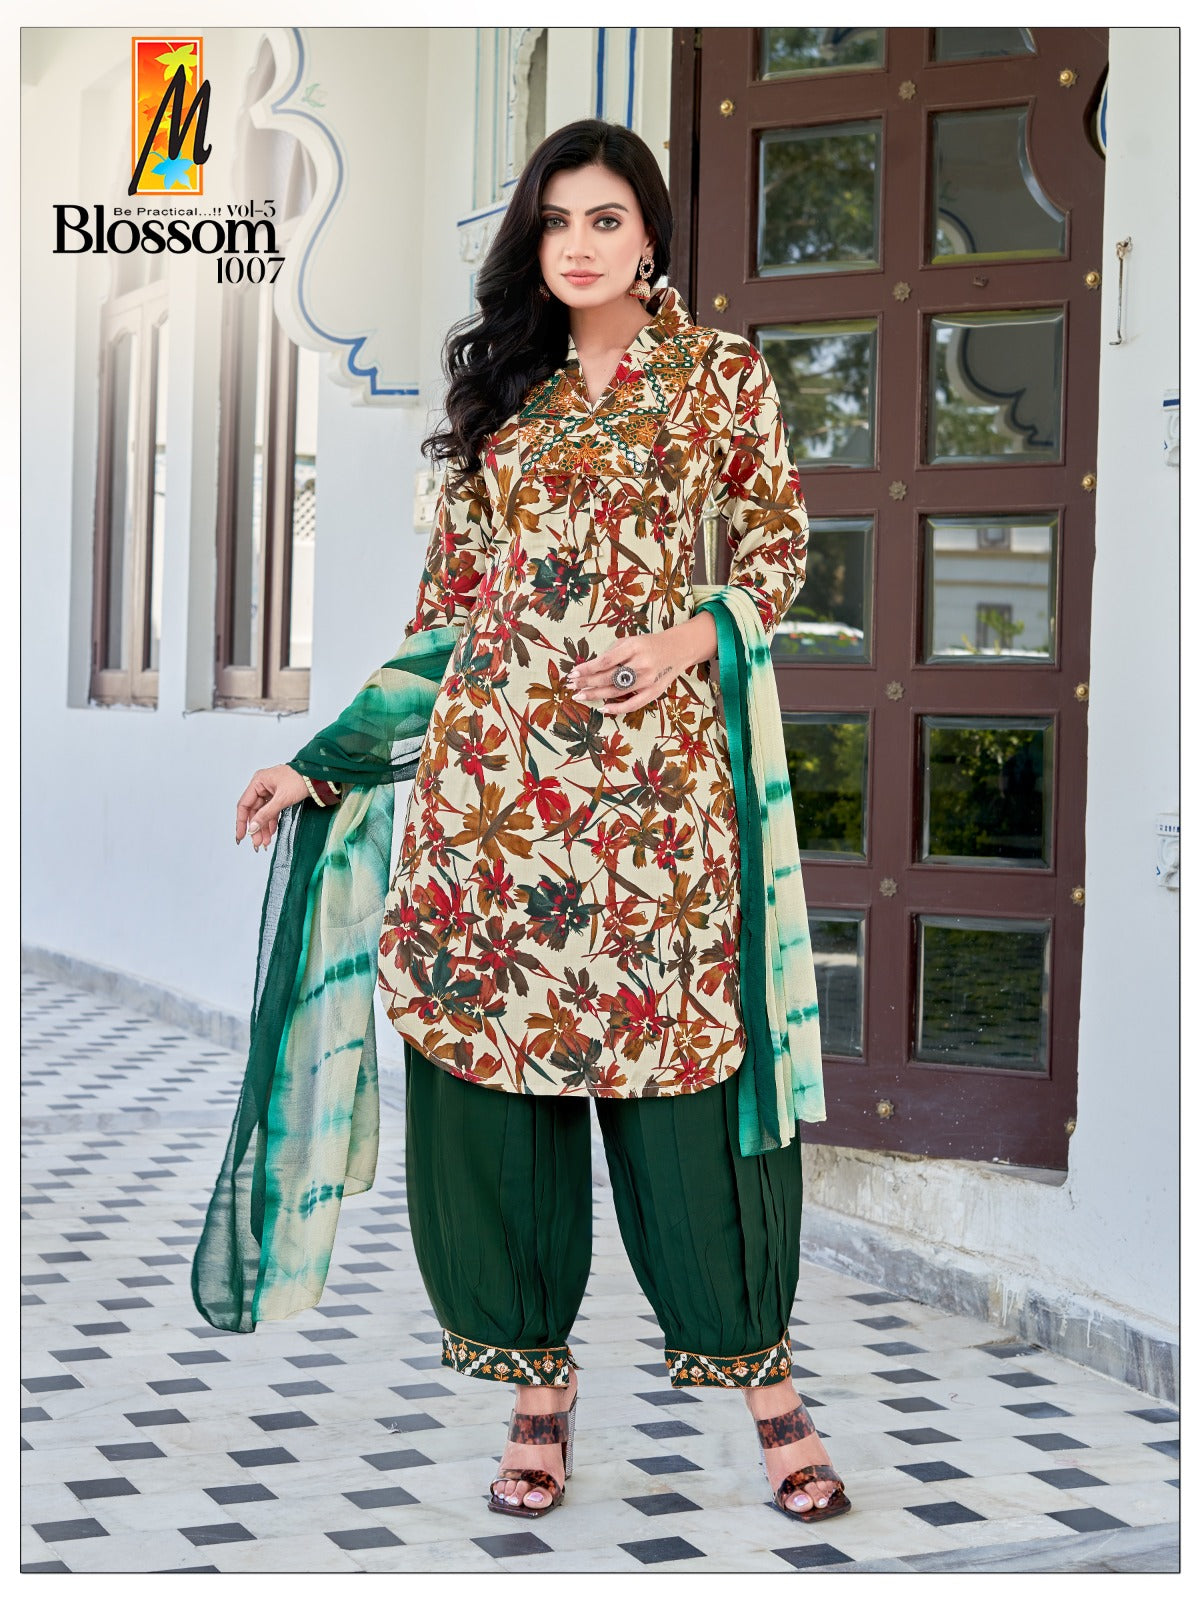 Blossom Vol 3 Manjeera Afghani Readymade Suit